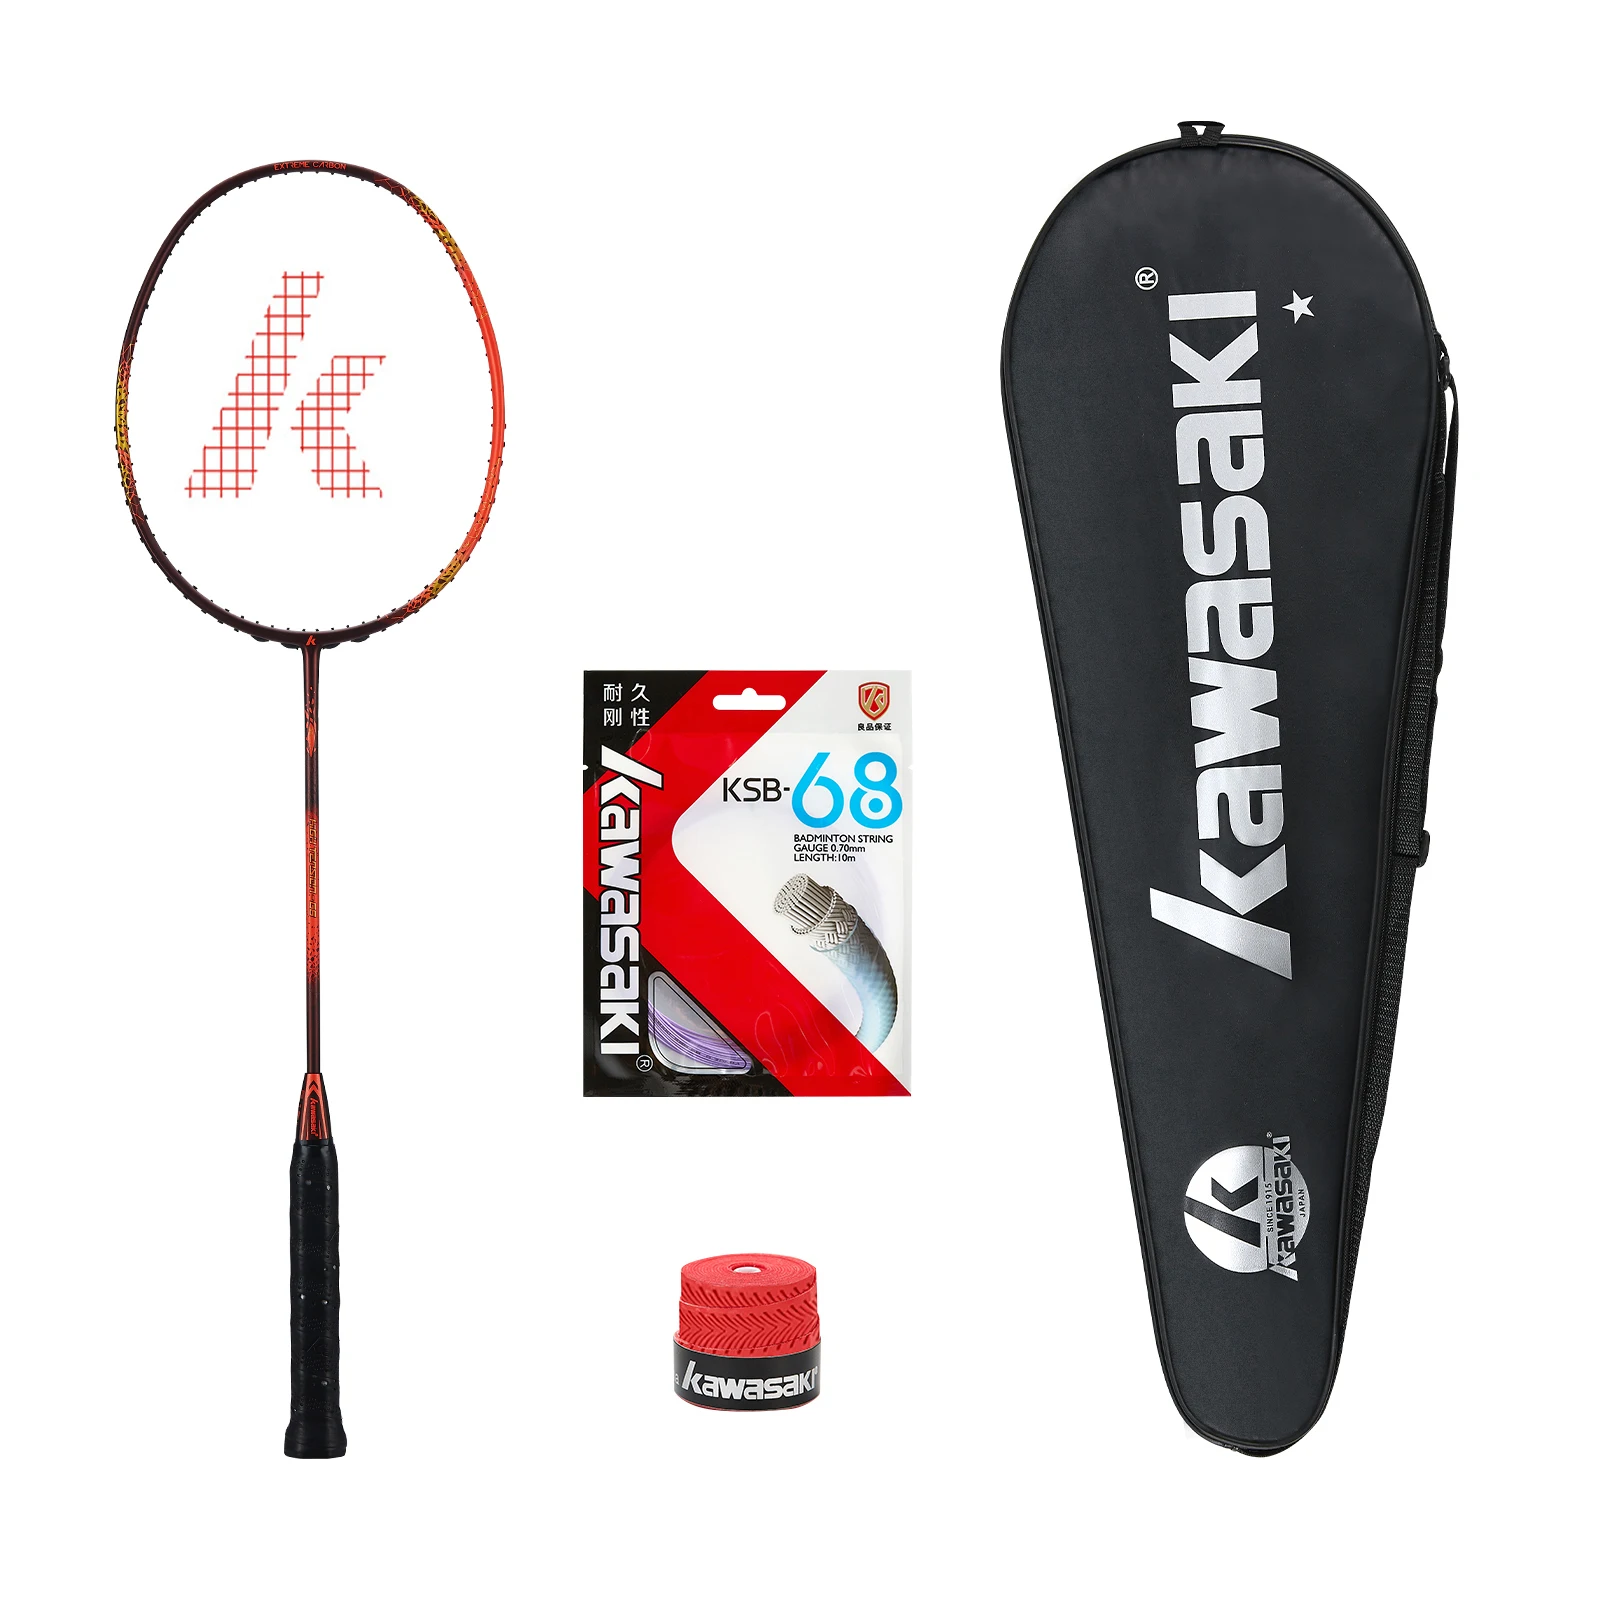 Kawasaki 24T  High Tension Carbon Fiber Badminton Racket High Rigidity G6 Tennis Racket With Free Gift